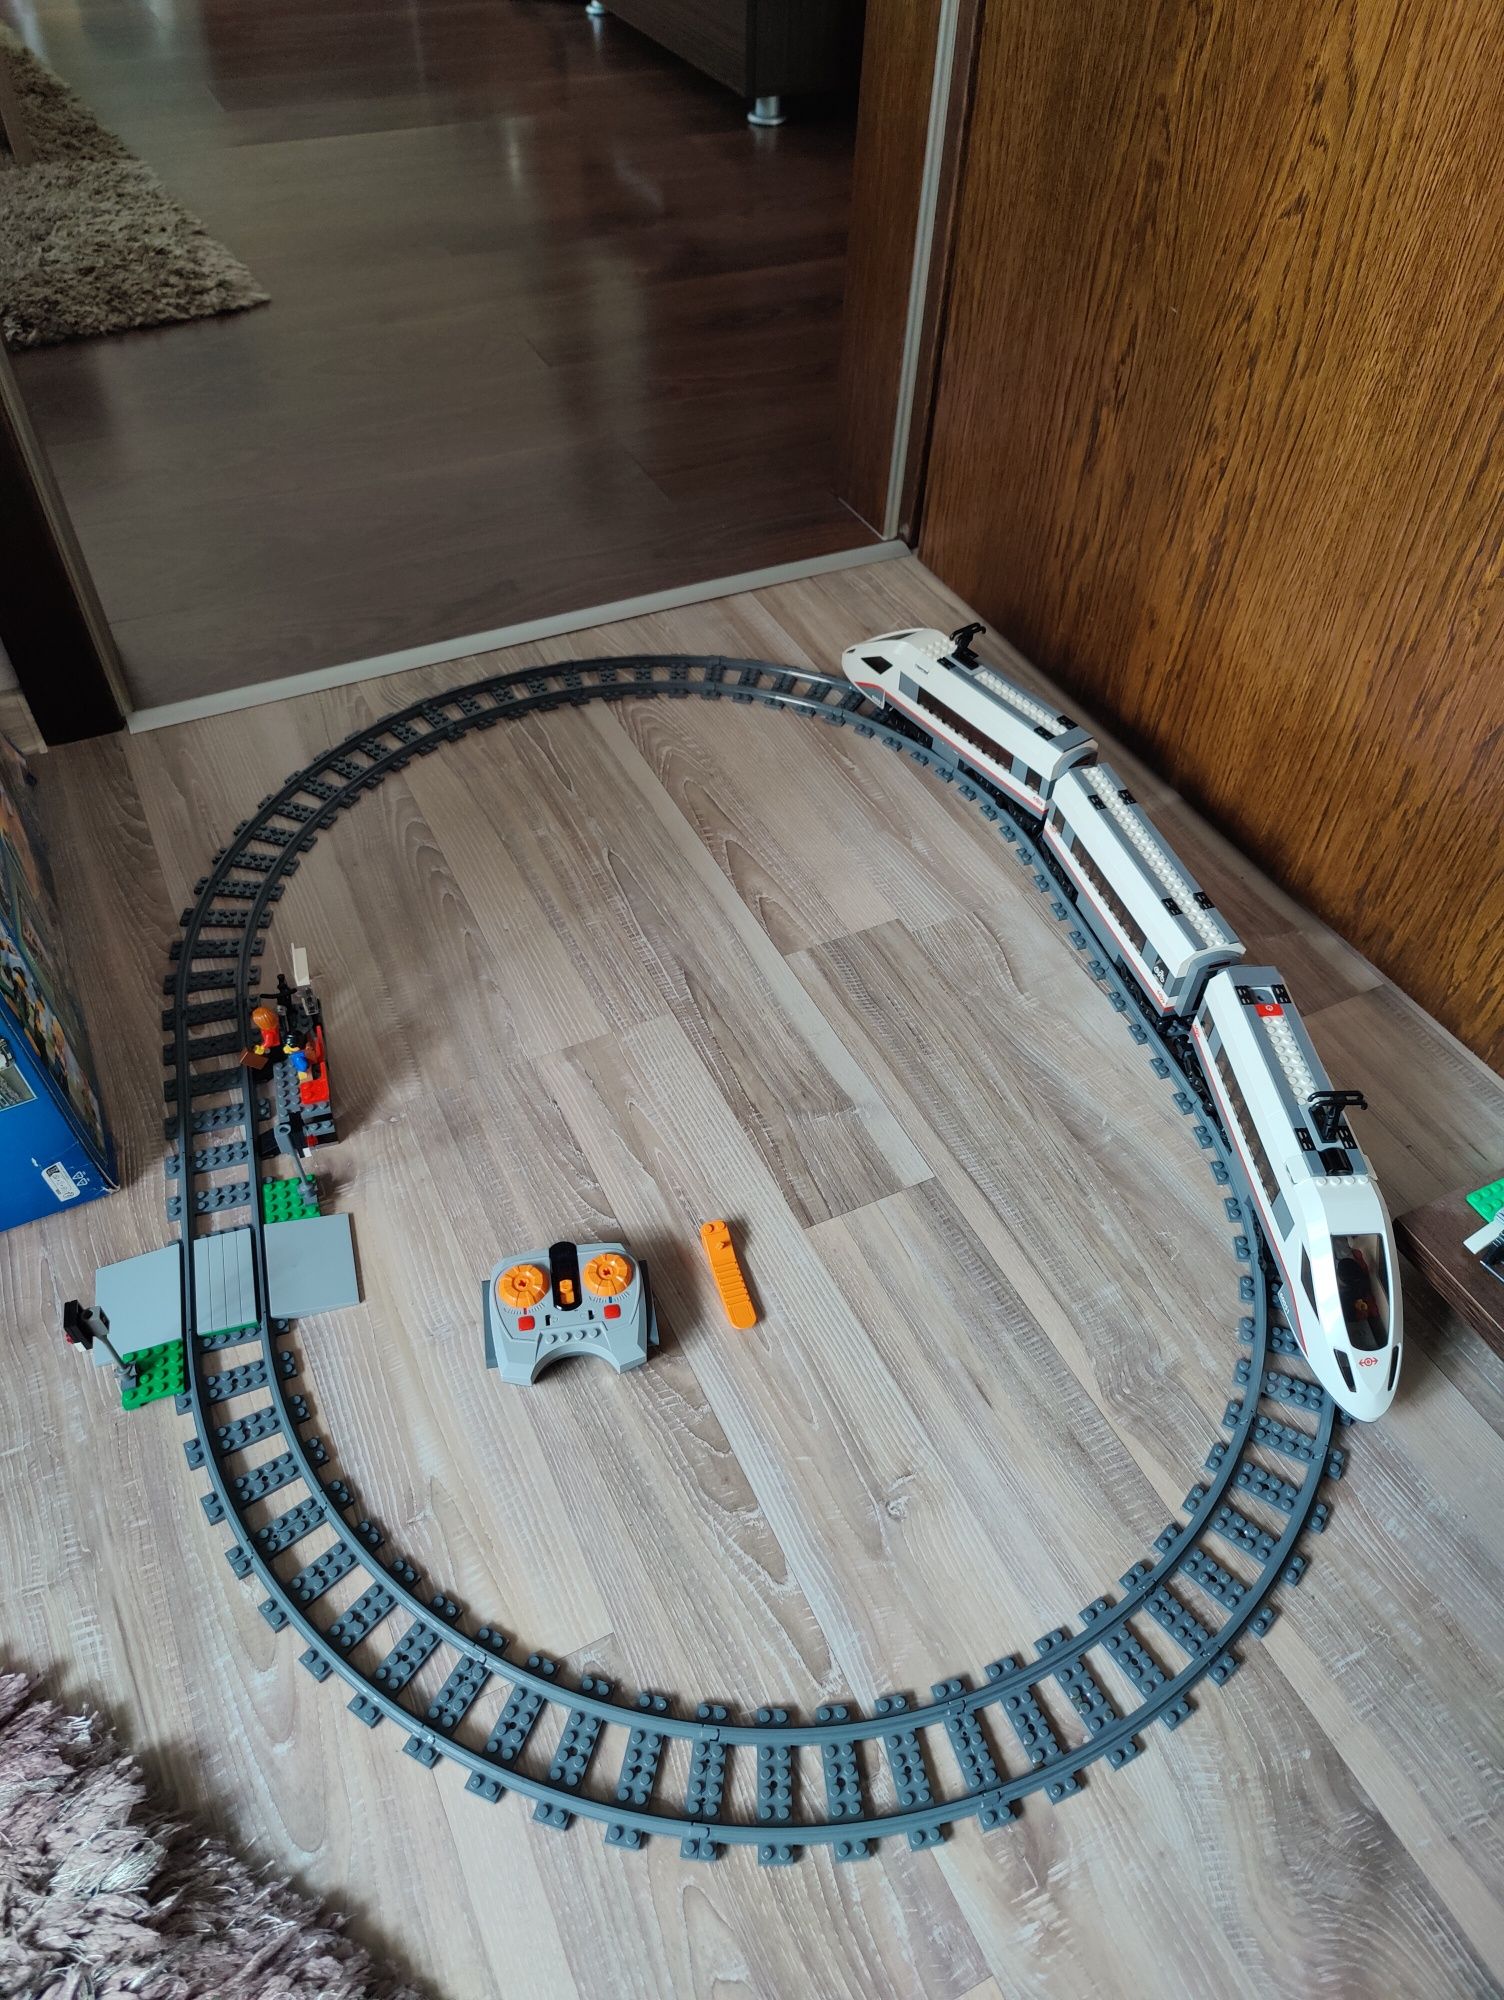 LEGO City 60051 - High-speed Passenger Train